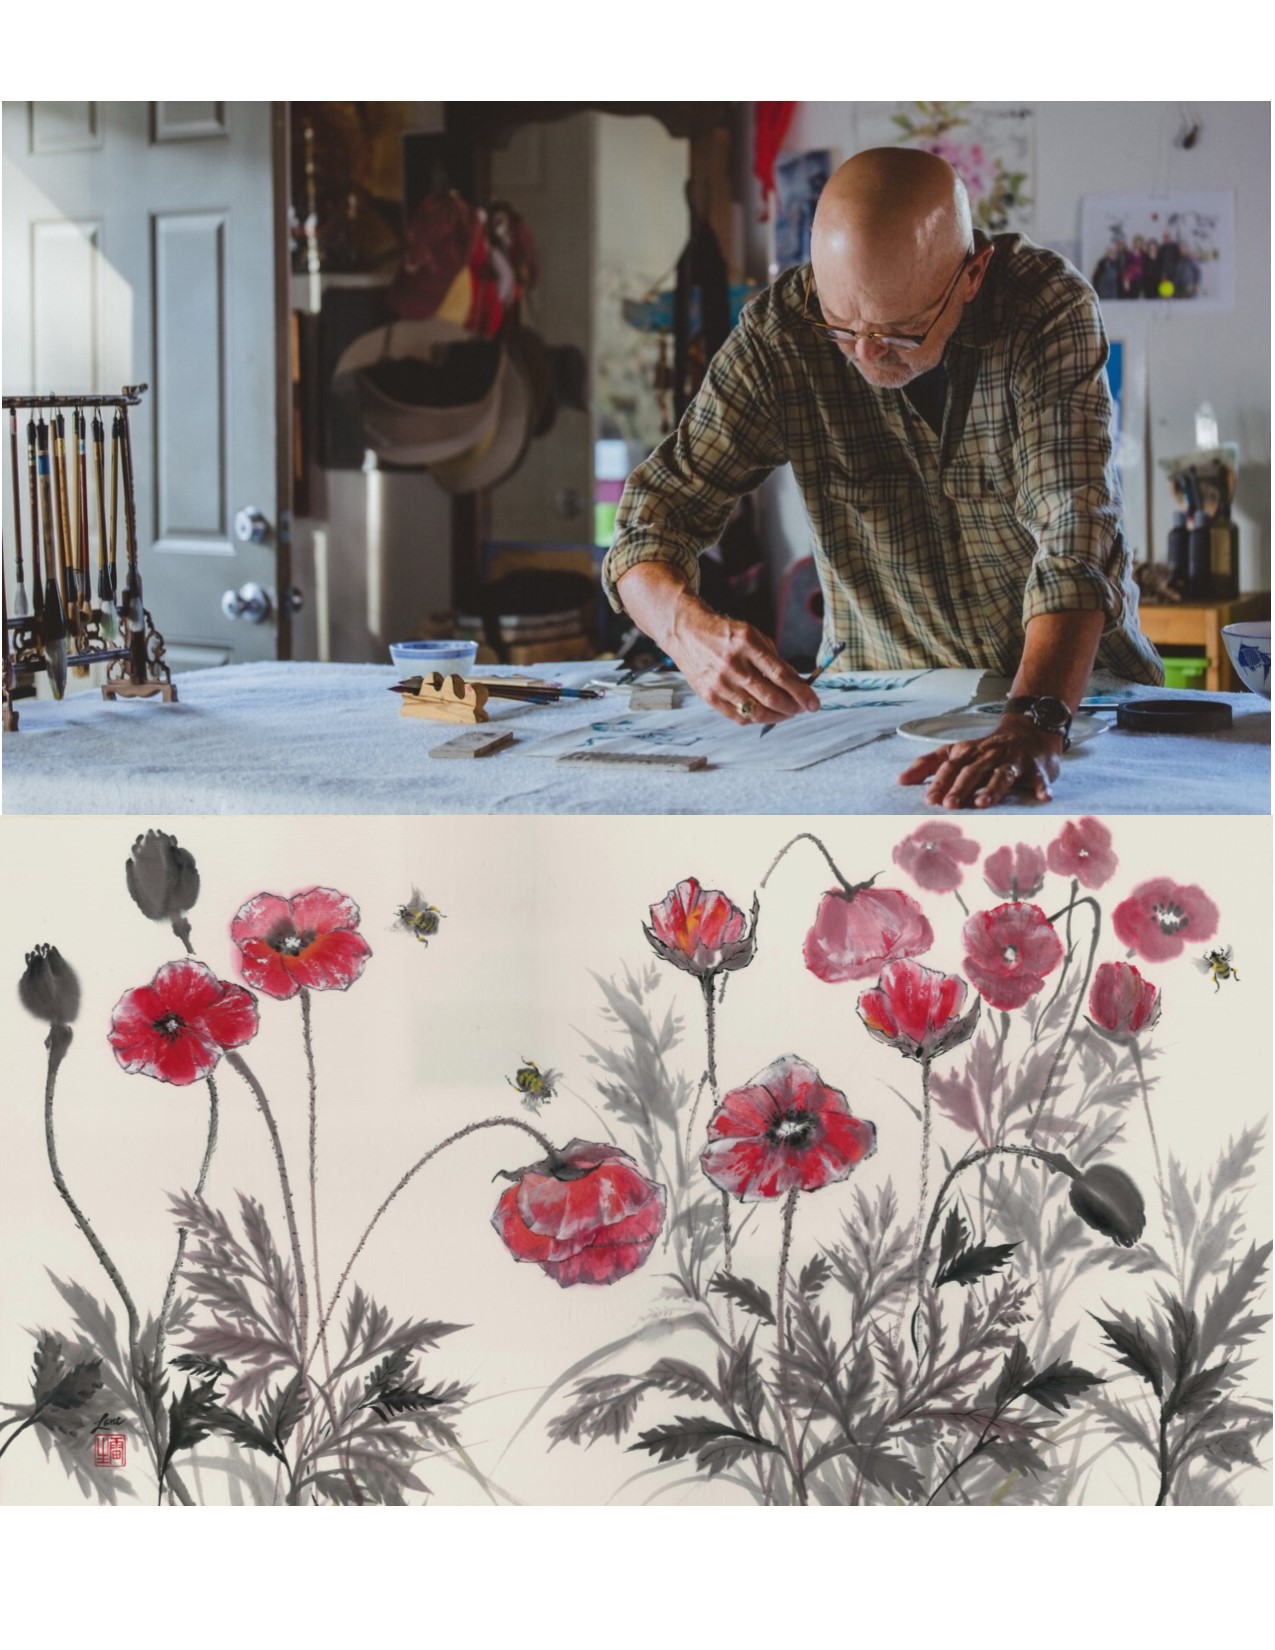 Mike Lane in studio, brush painting of poppies